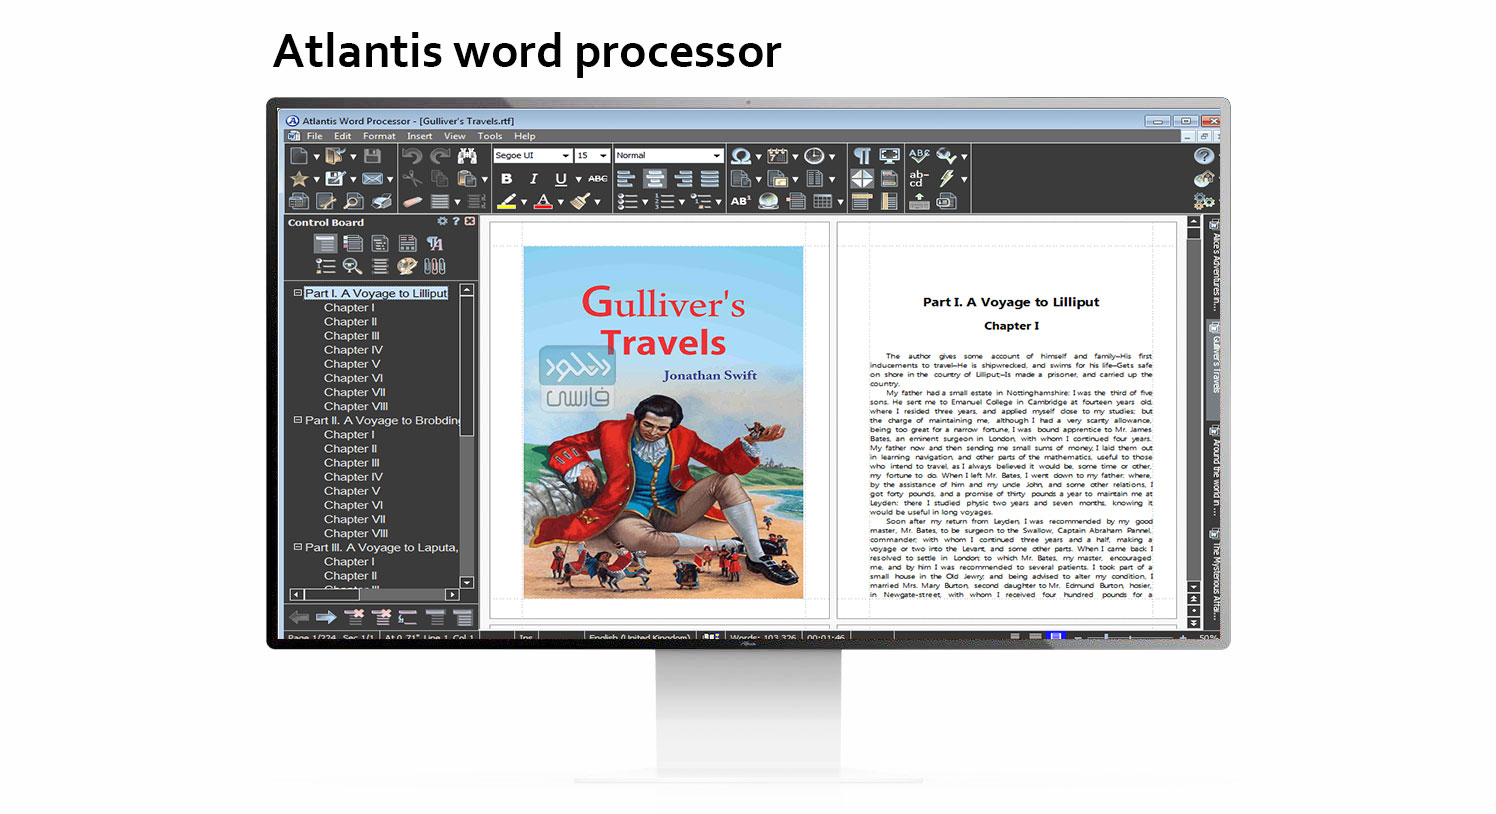 Atlantis Word Processor 4.3.3 download the last version for ios